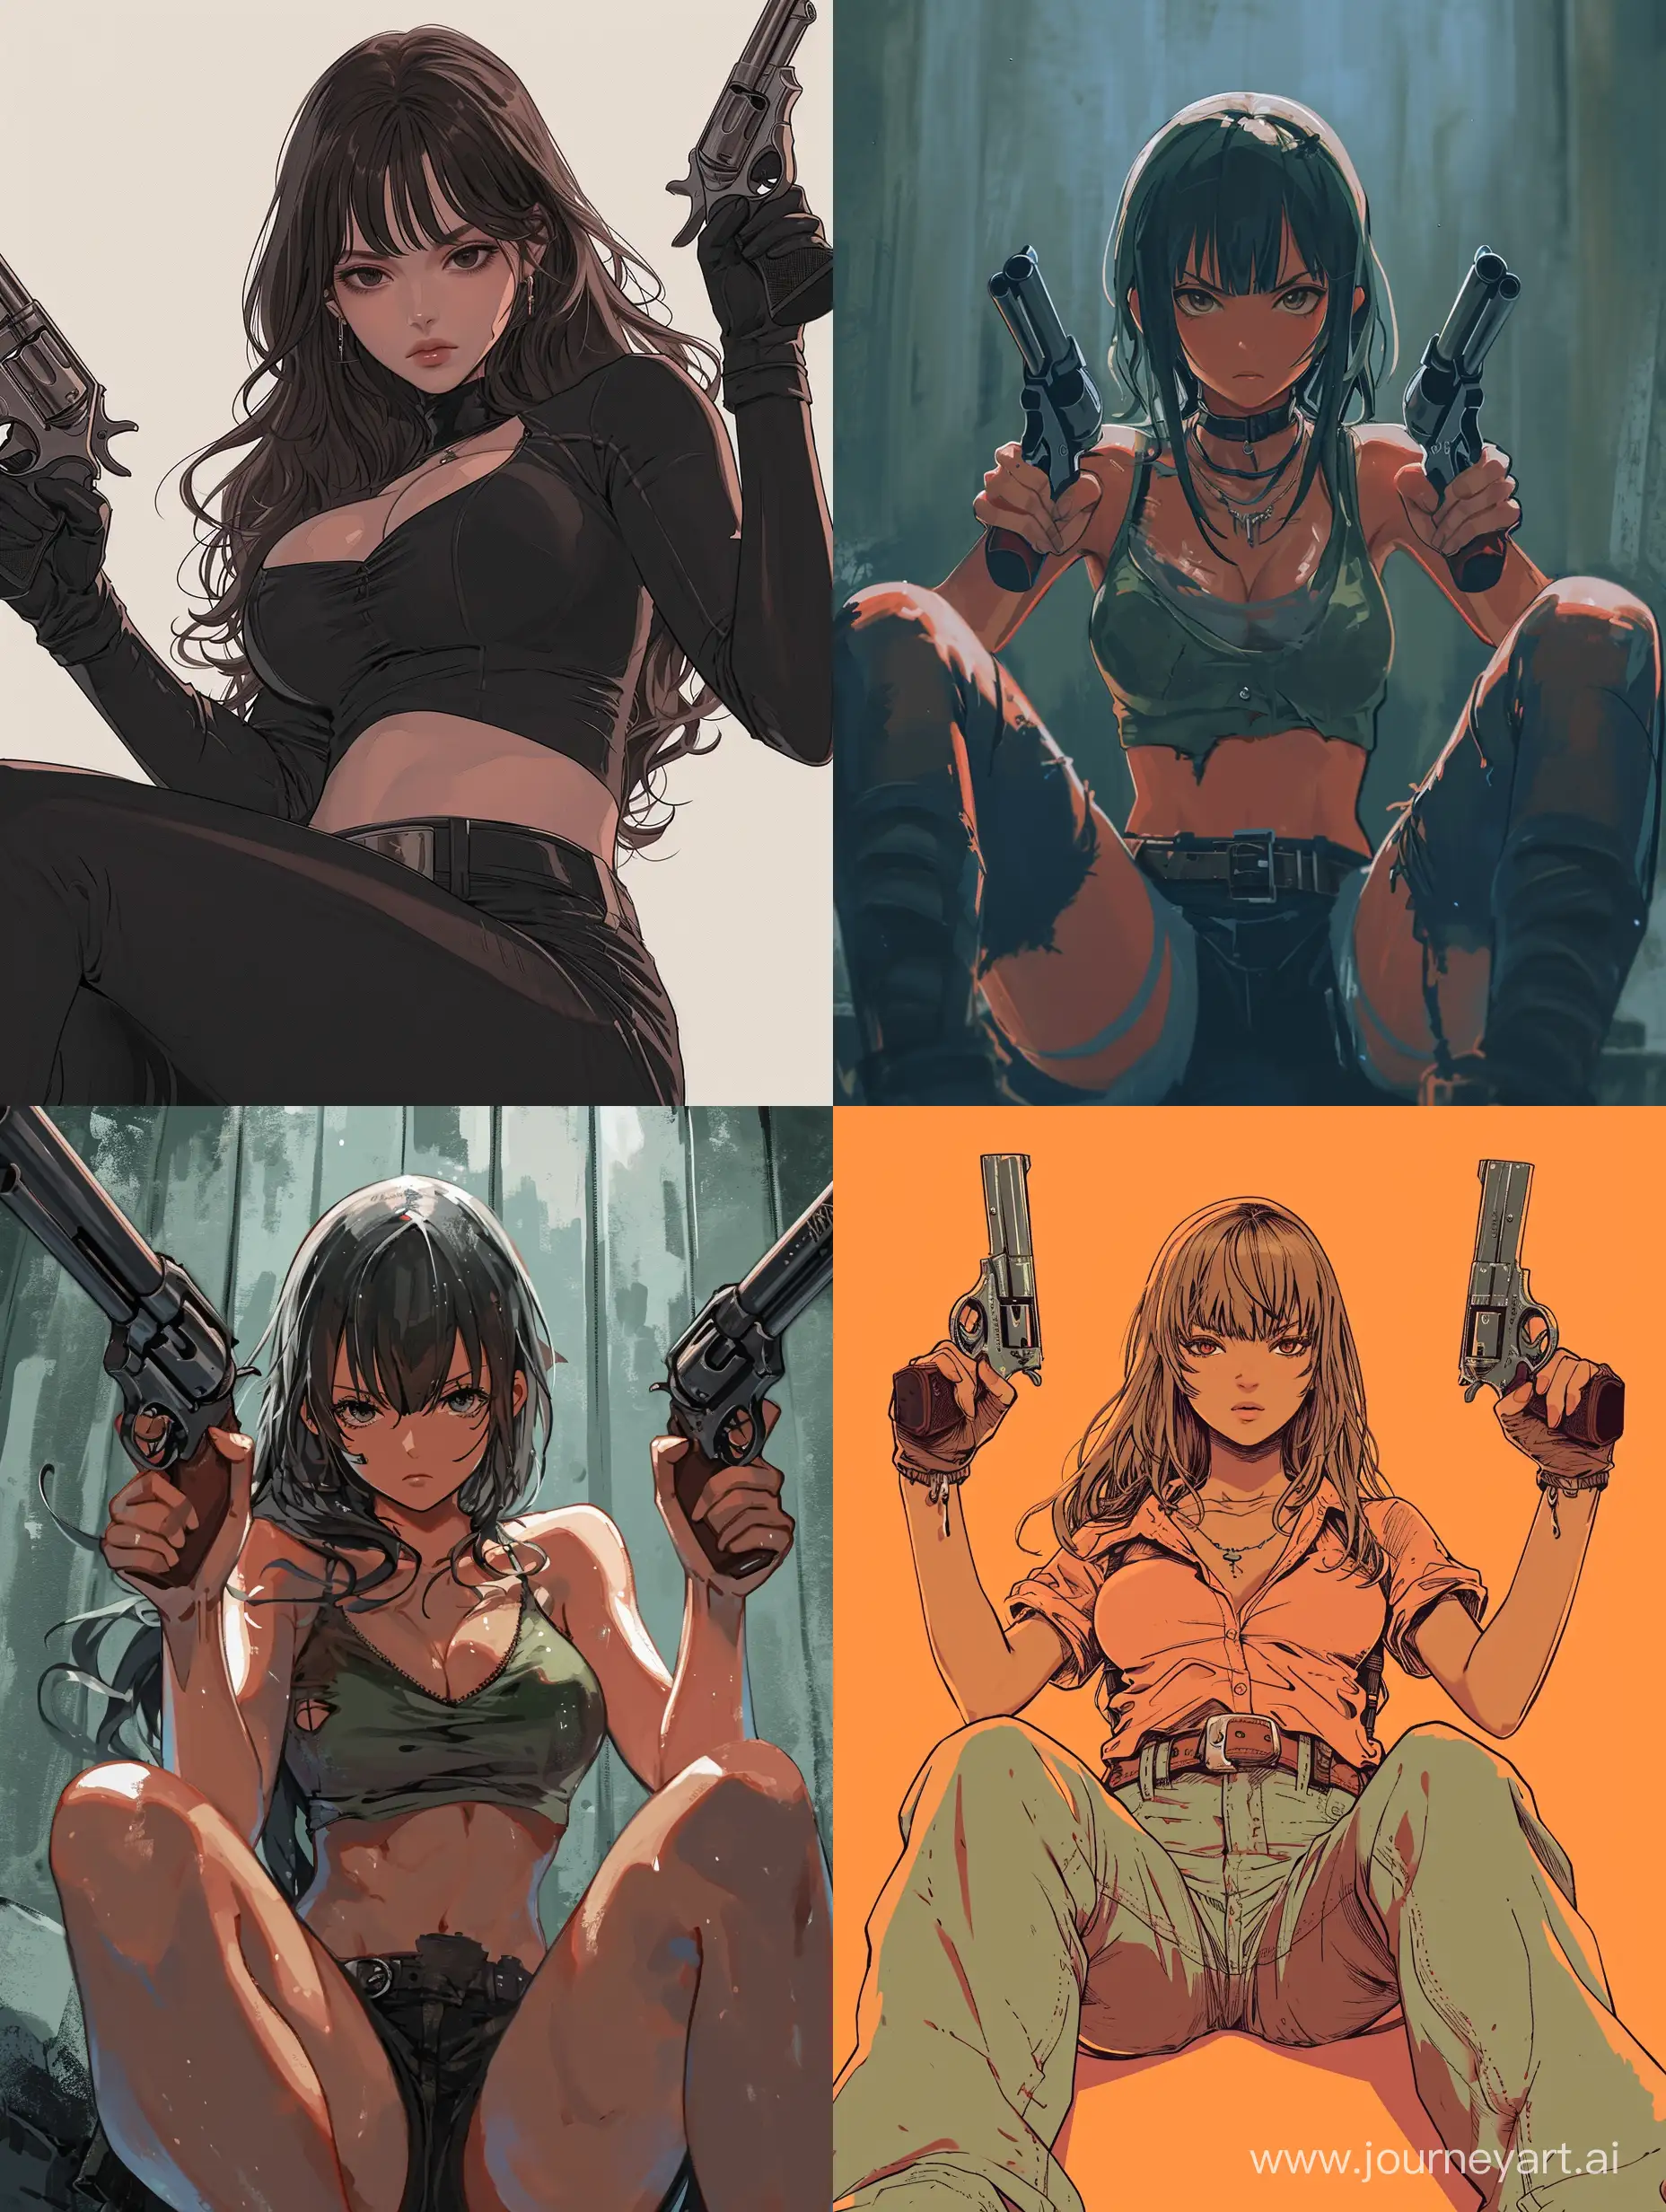 Badass-Anime-Girl-with-Dual-Revolvers-Epic-Digital-Illustration